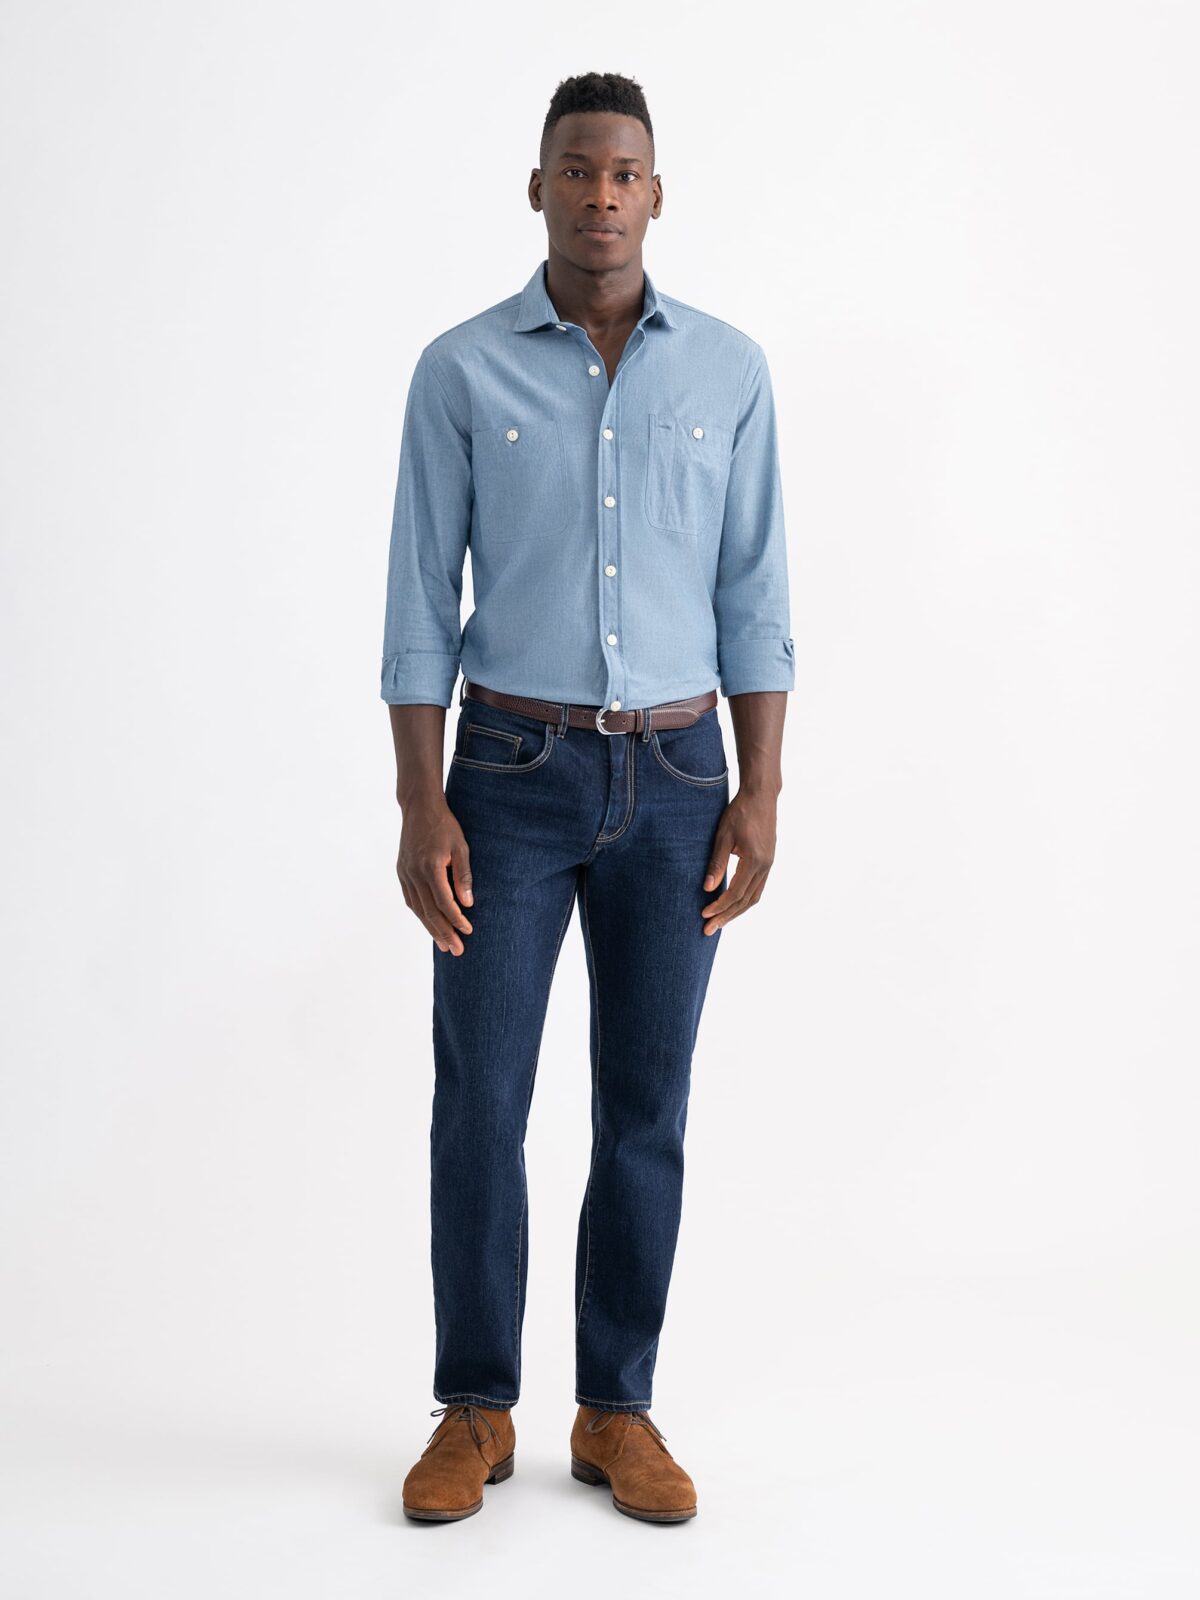 Cremieux Blue Label Madison Classic Fit Dark Wash Denim Jeans | Dillard's